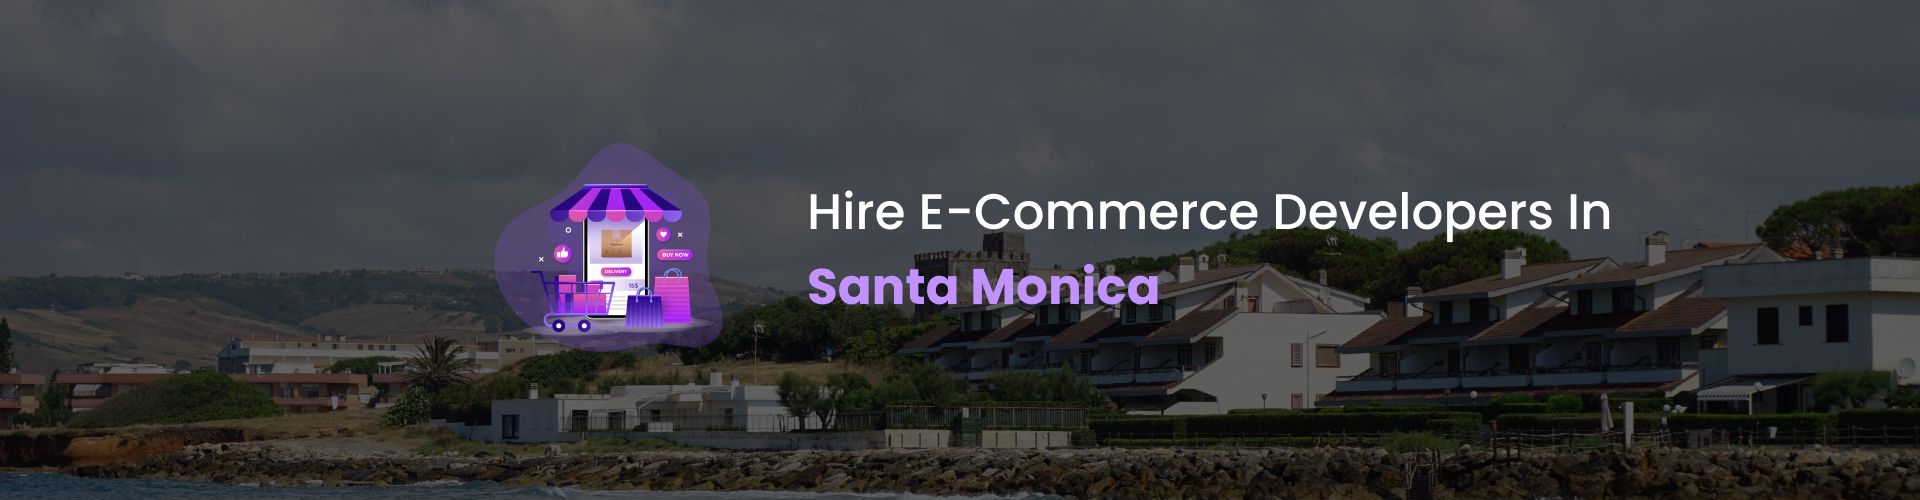 hire ecommerce developers in santa monica